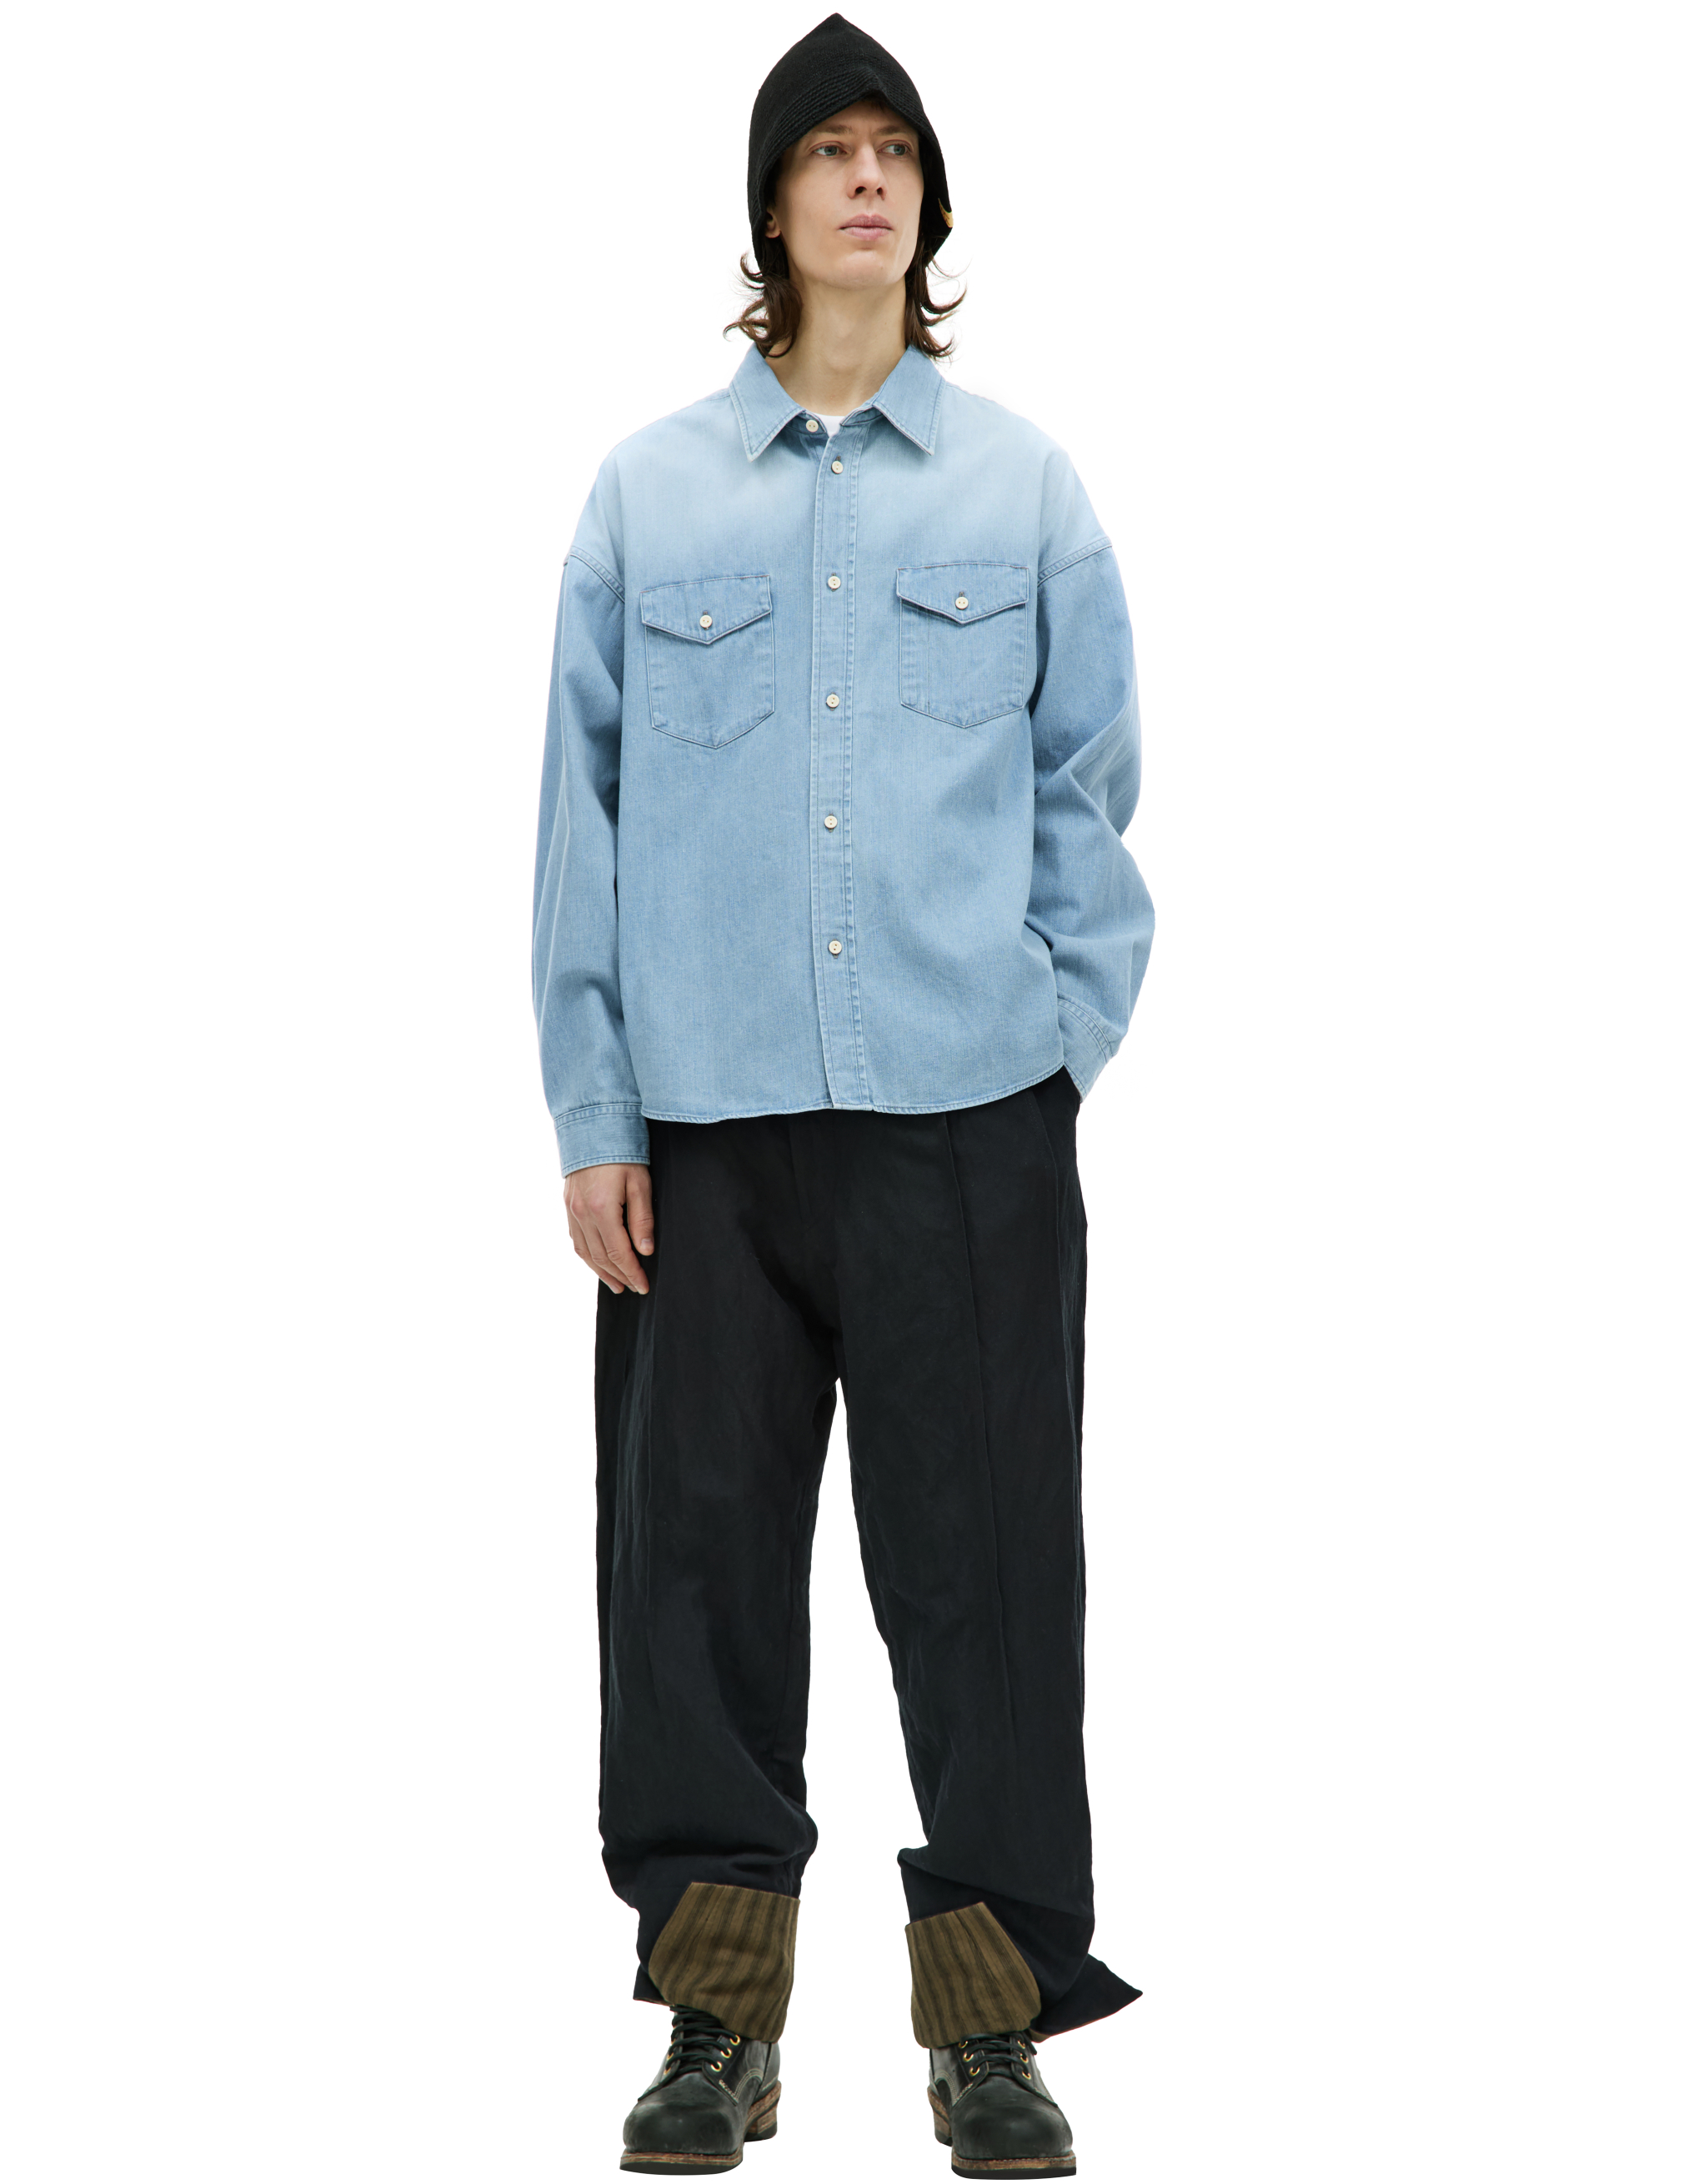 Рубашка Pioneer с накладными карманами visvim 0123205007002, размер 4